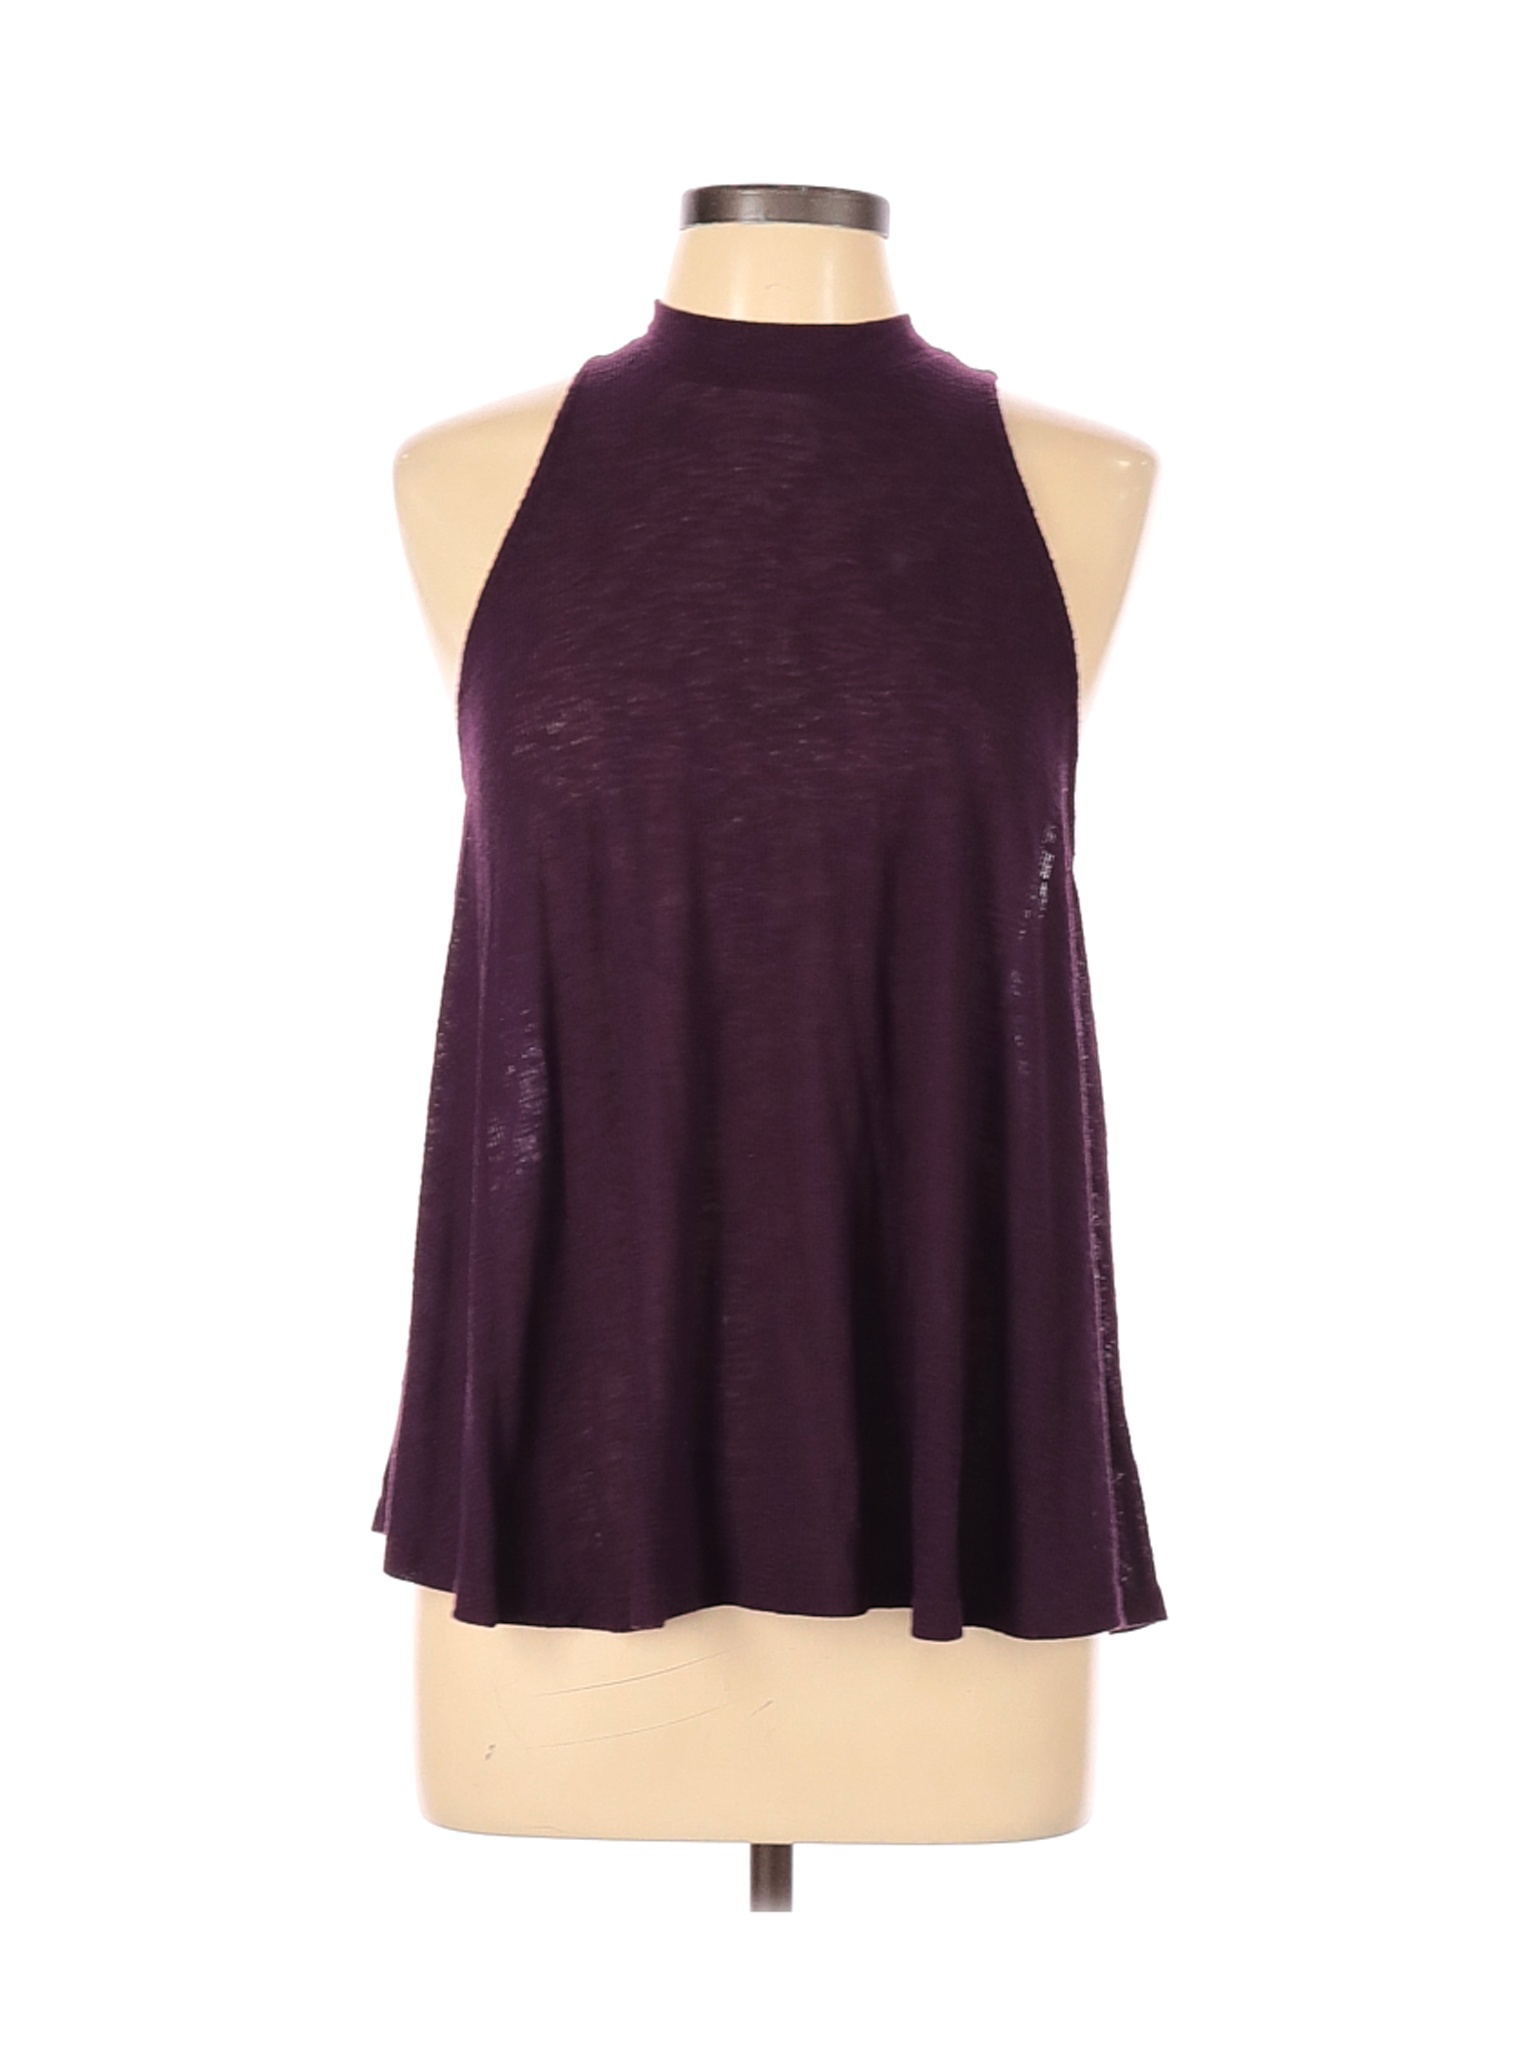 Express Women Purple Sleeveless Top L | eBay